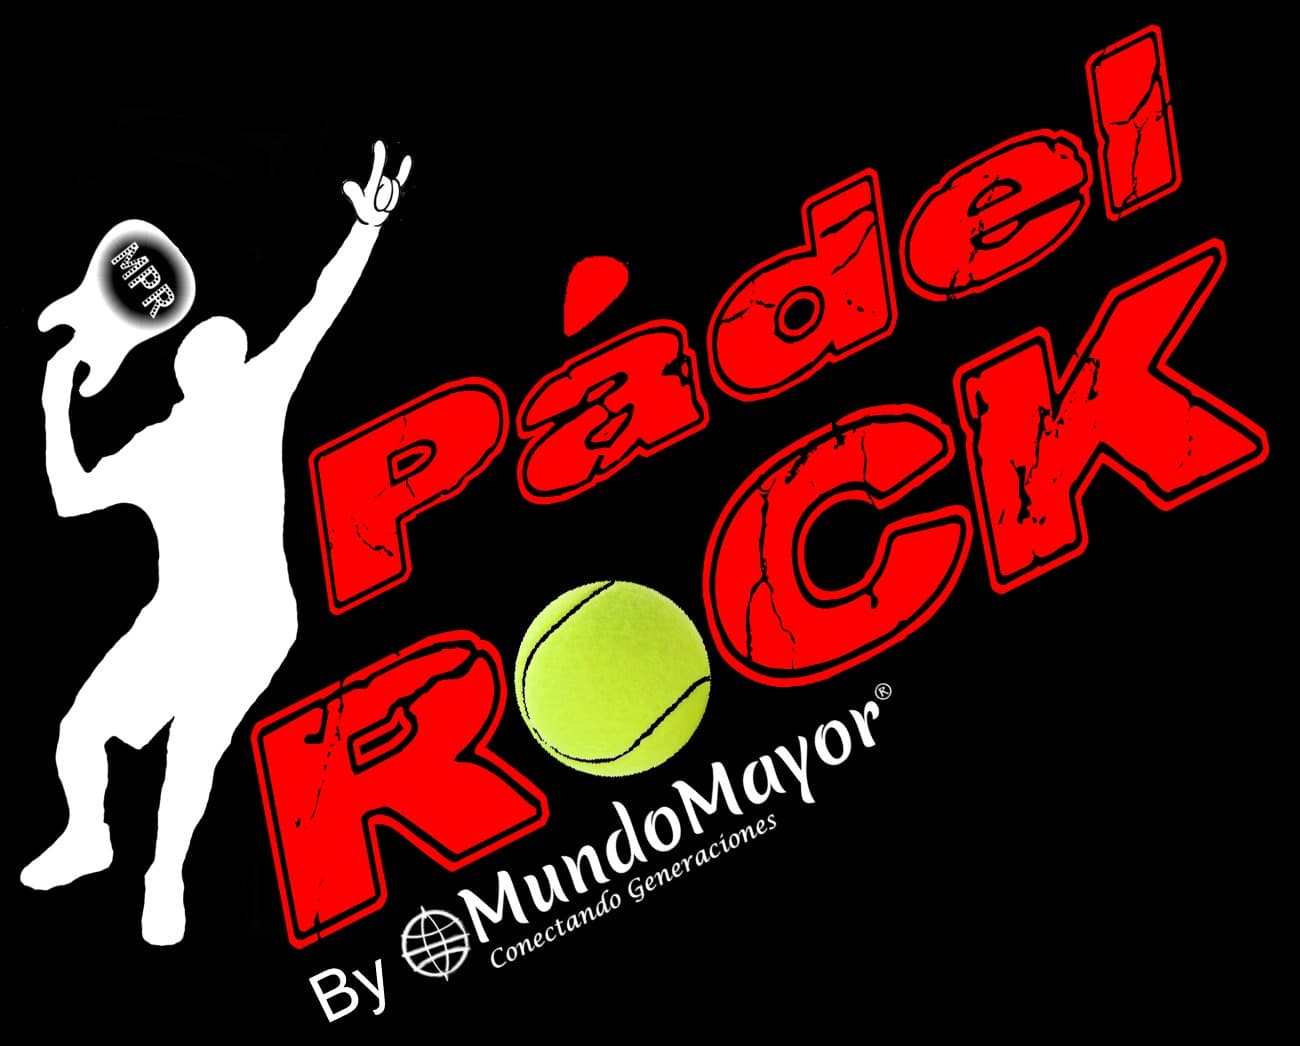 Pdel Rock by MundoMayor